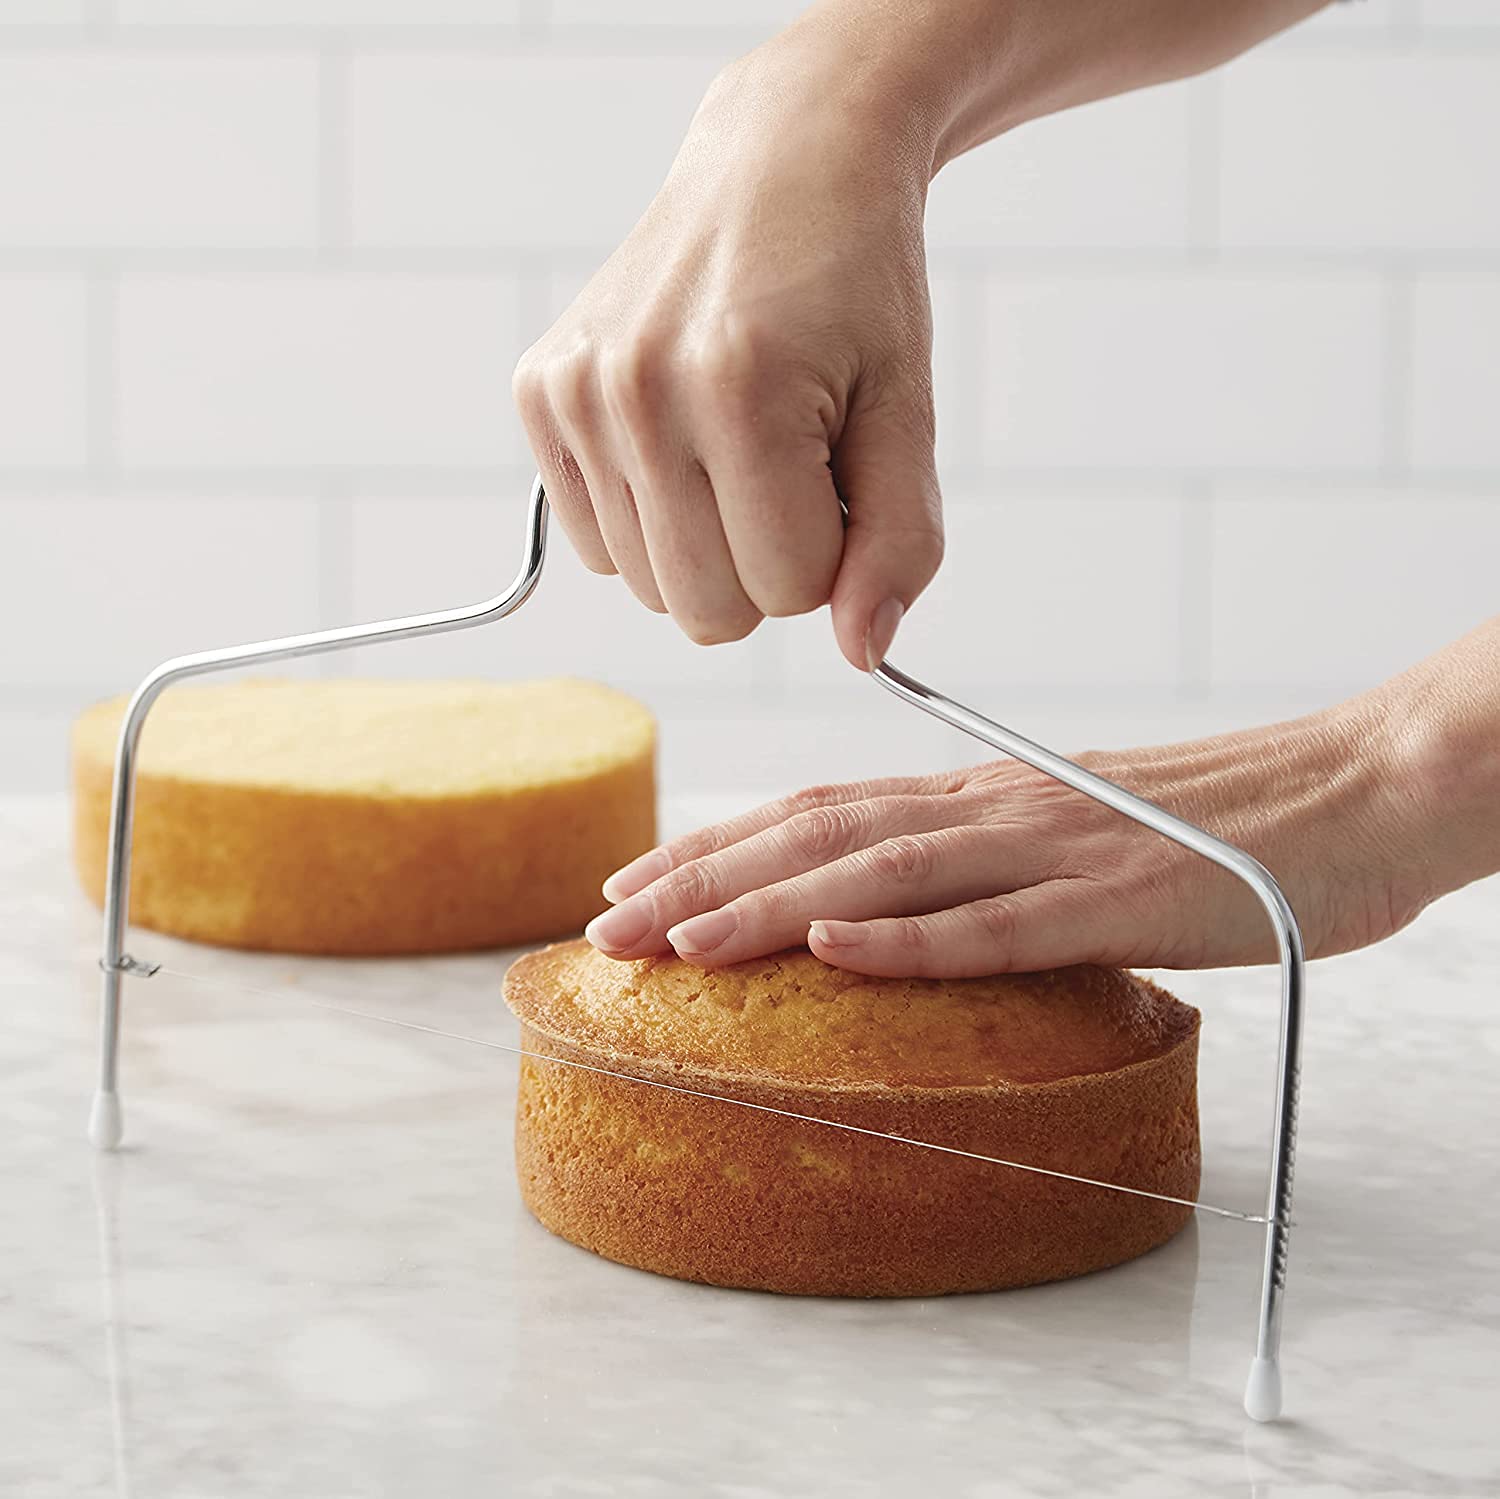 Horizontal Cake slicer - Horizontal layer cake cutting machine - Horizontal  slabbing products - YouTube